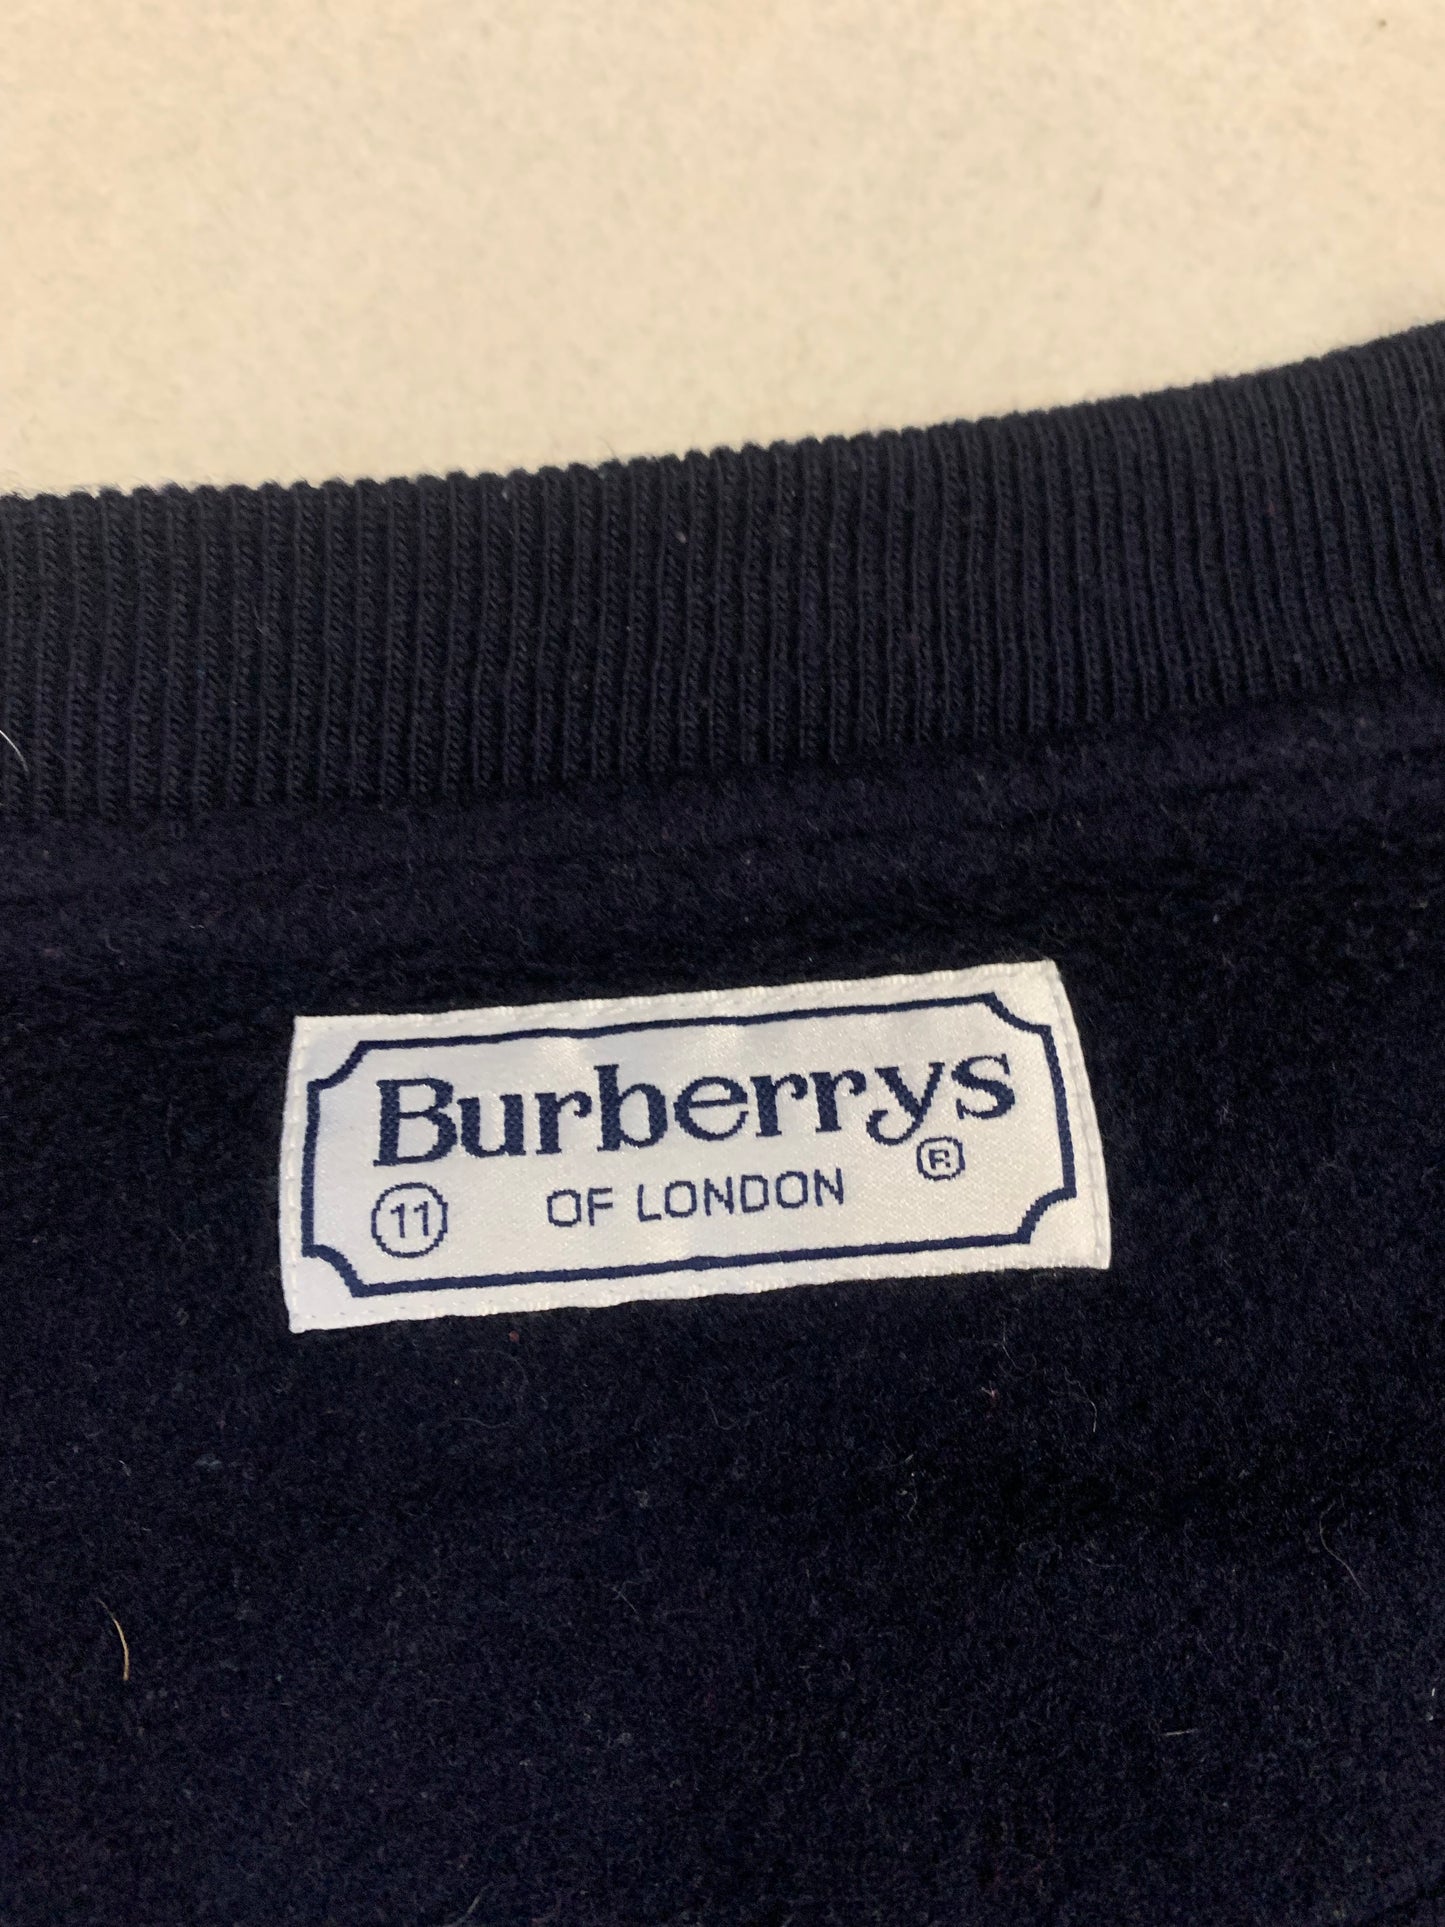 Burberry Vintage 80's Cardigan - Xl